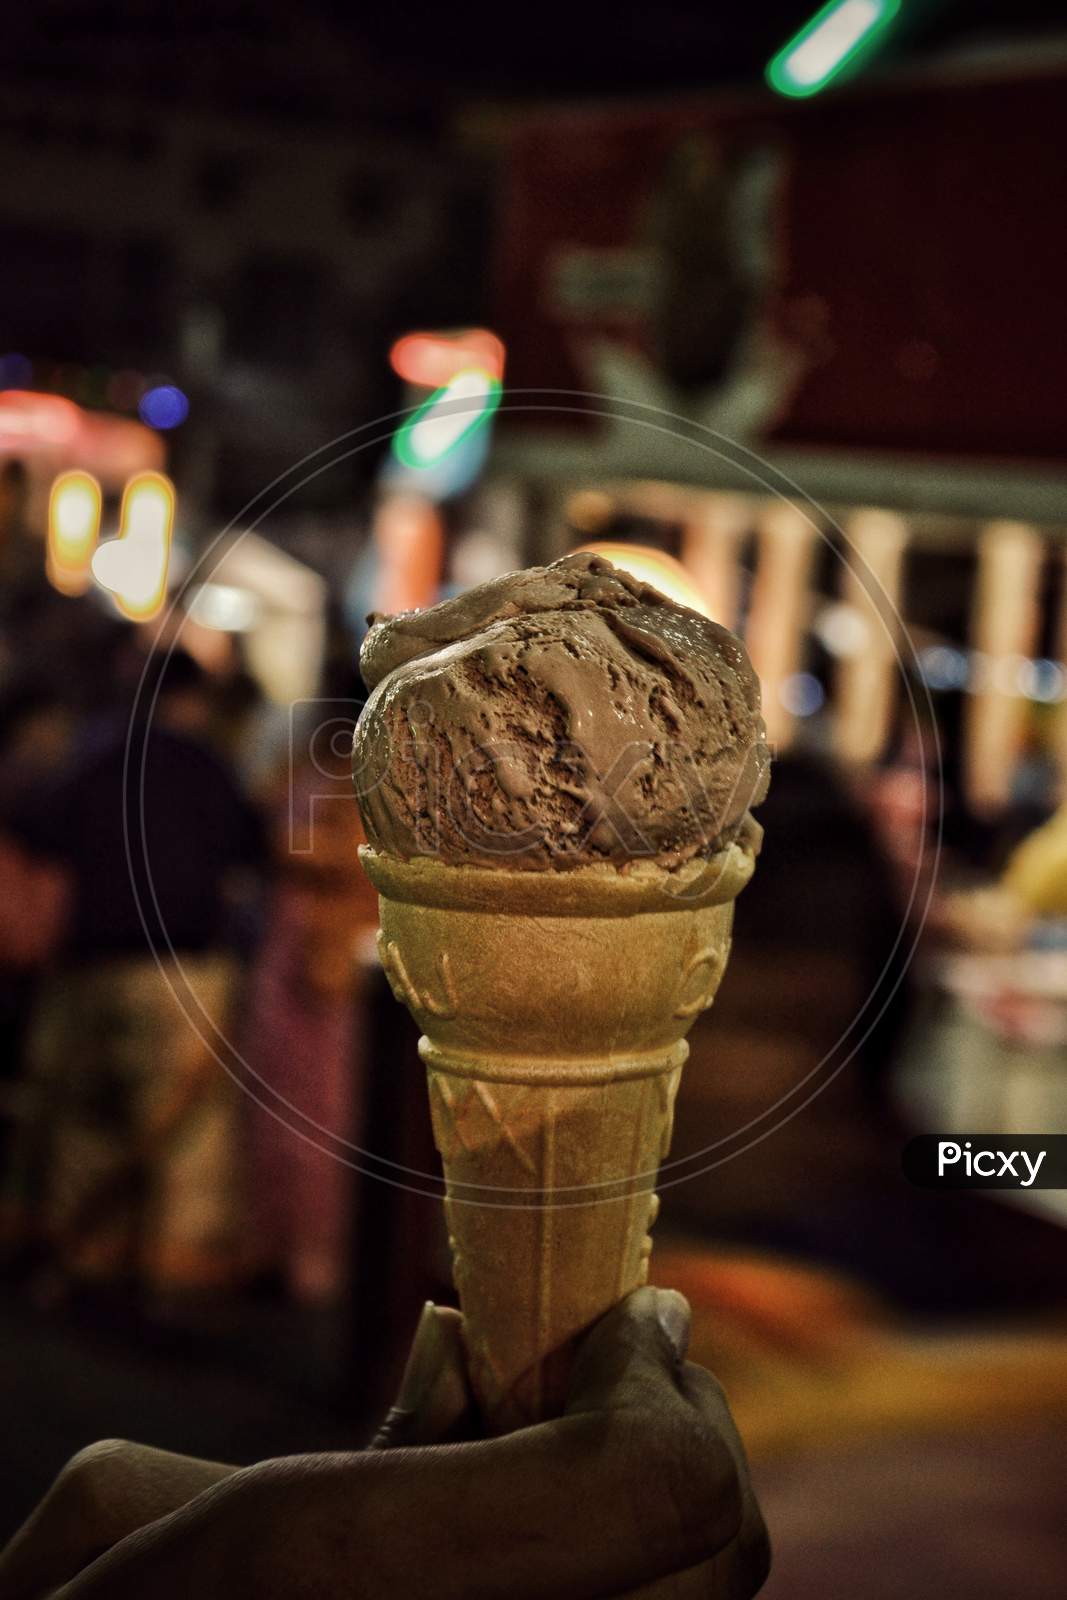 Ice-cream during nights.